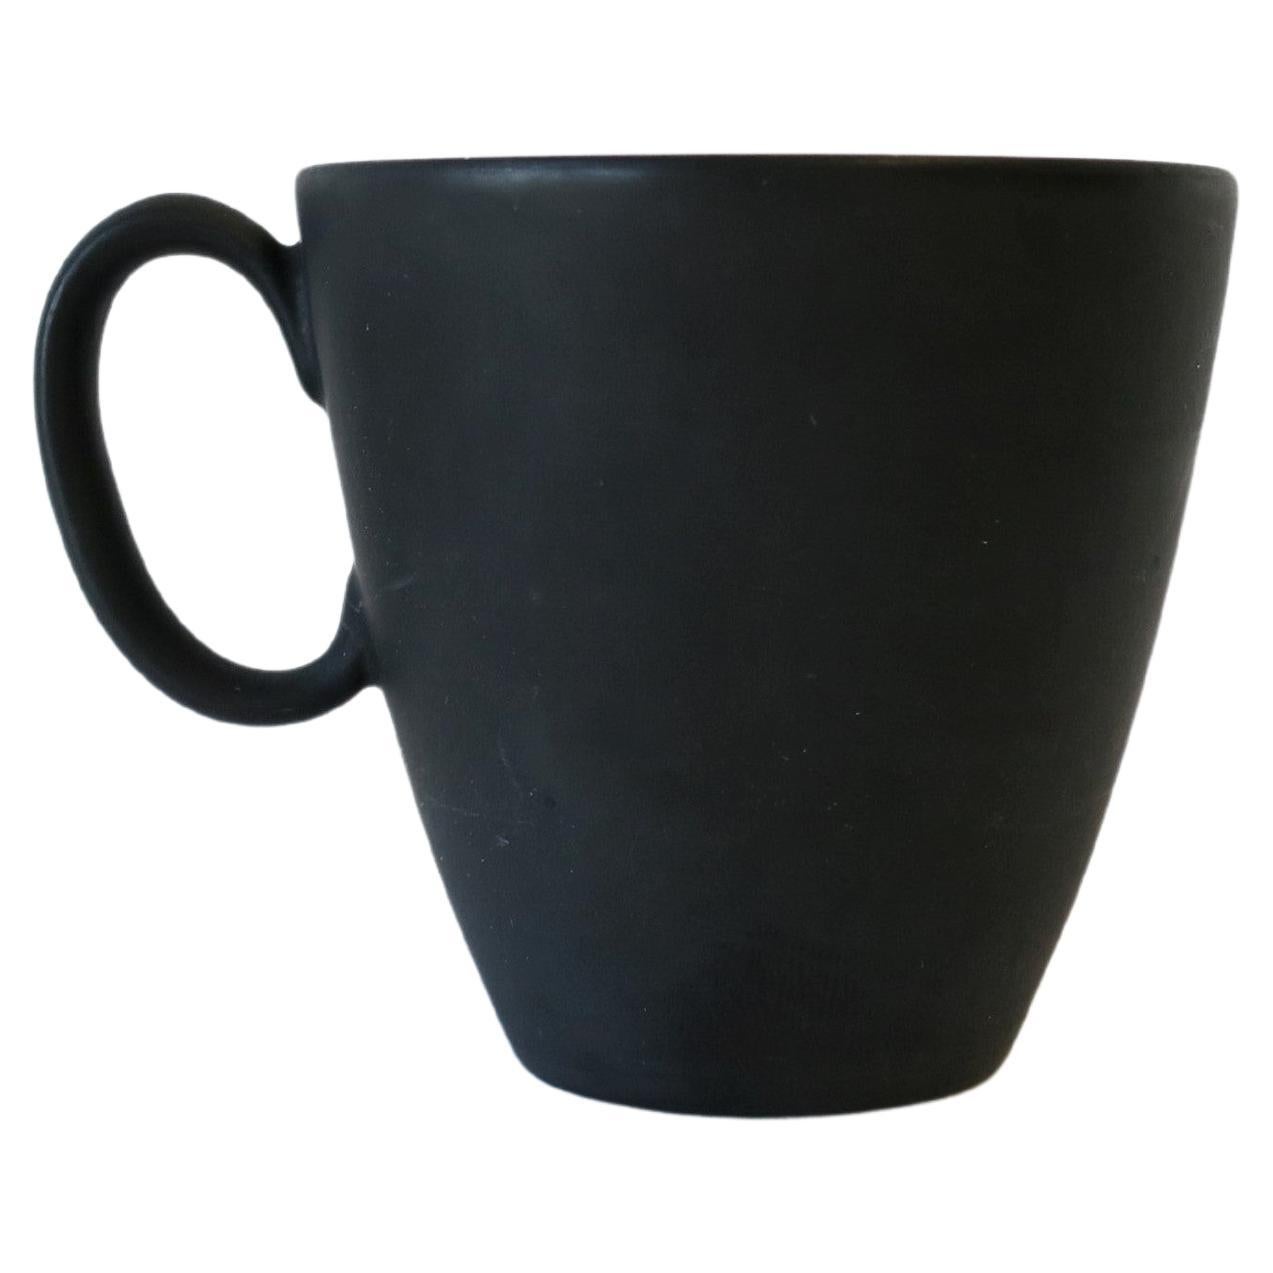 Designer Ray Loewy Matte Black & White Espresso Coffee or Tea Demitasse Cup